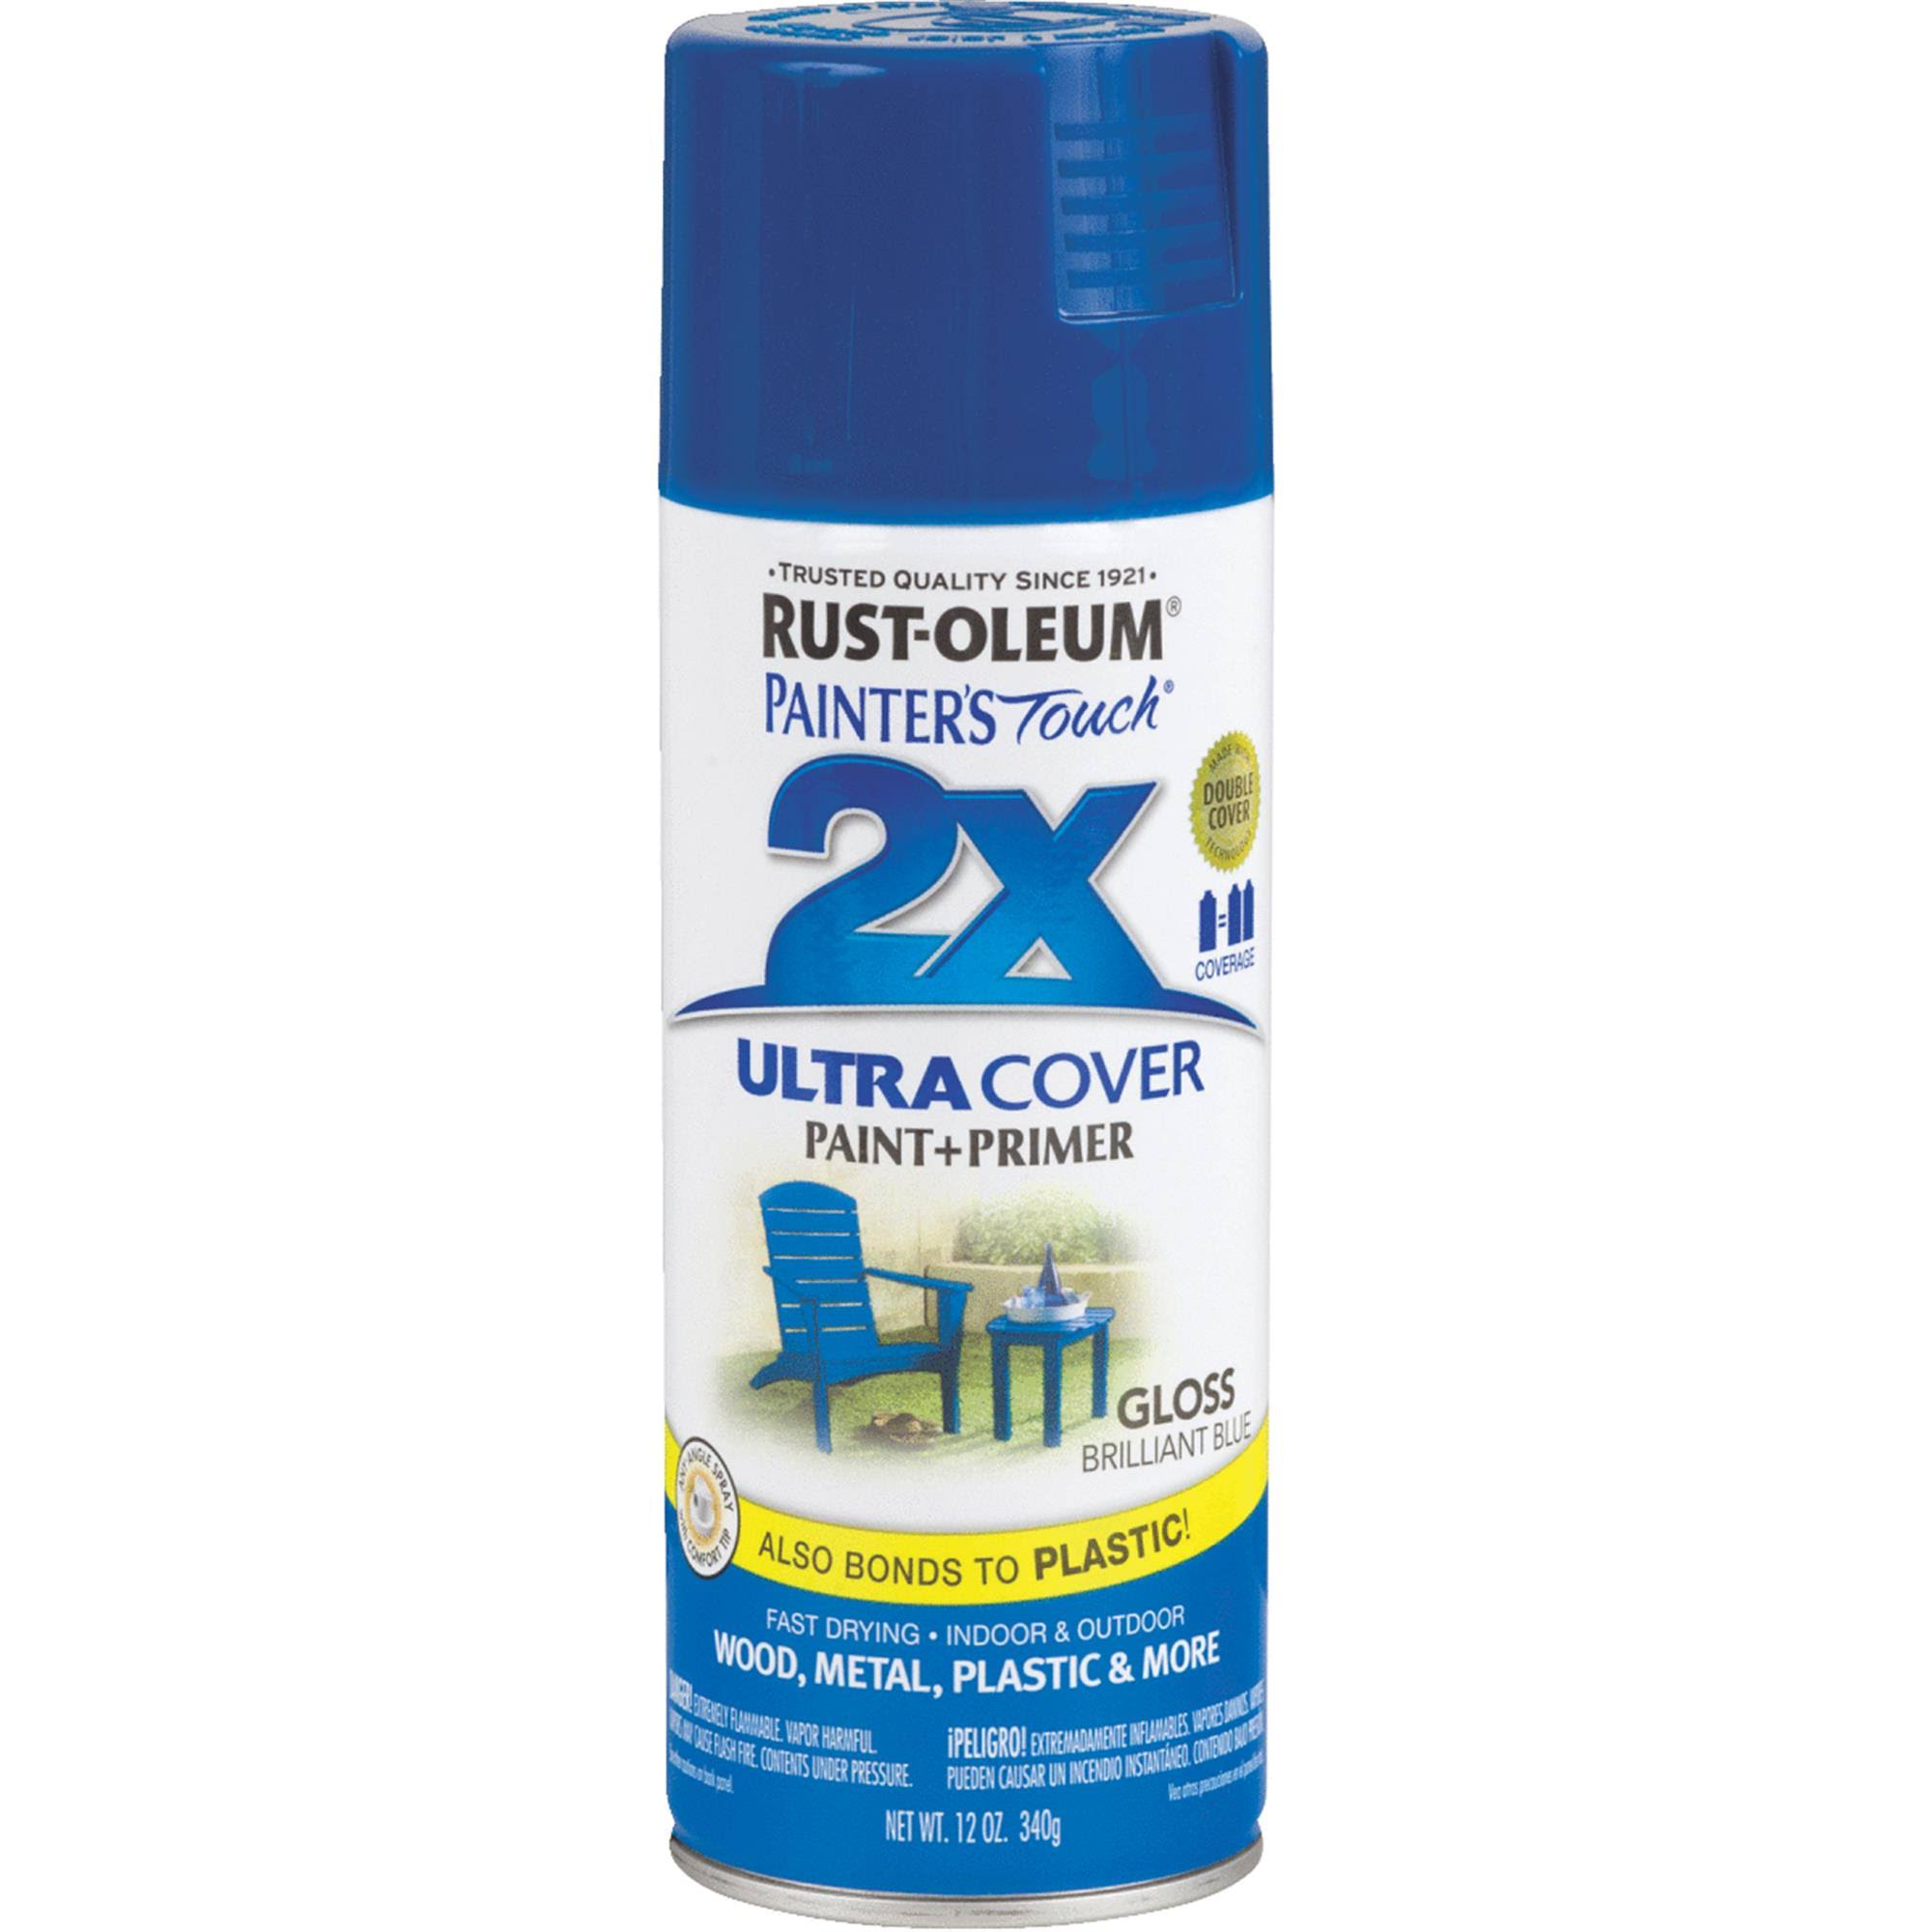 Rust-Oleum Painter's Touch Multi Purpose Spray Paint - Brilliant Blue, 12 oz